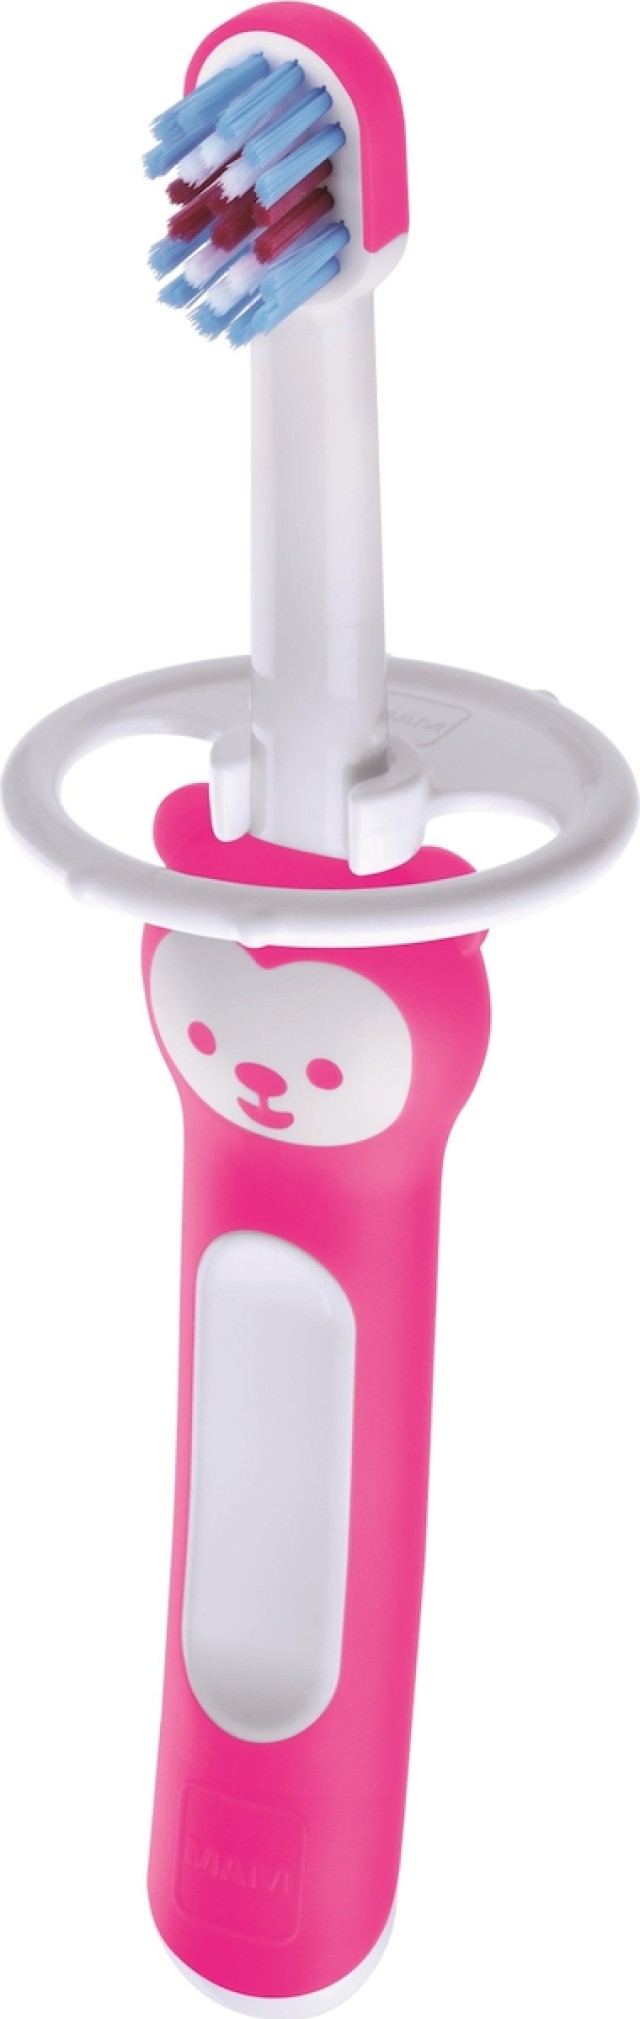 Mam Baby's Brush Βρεφική Οδοντόβουρτσα με Λαβή Αρκουδάκι για 6m+ Χρώμα:Ροζ 1 Τεμάχιο [606]